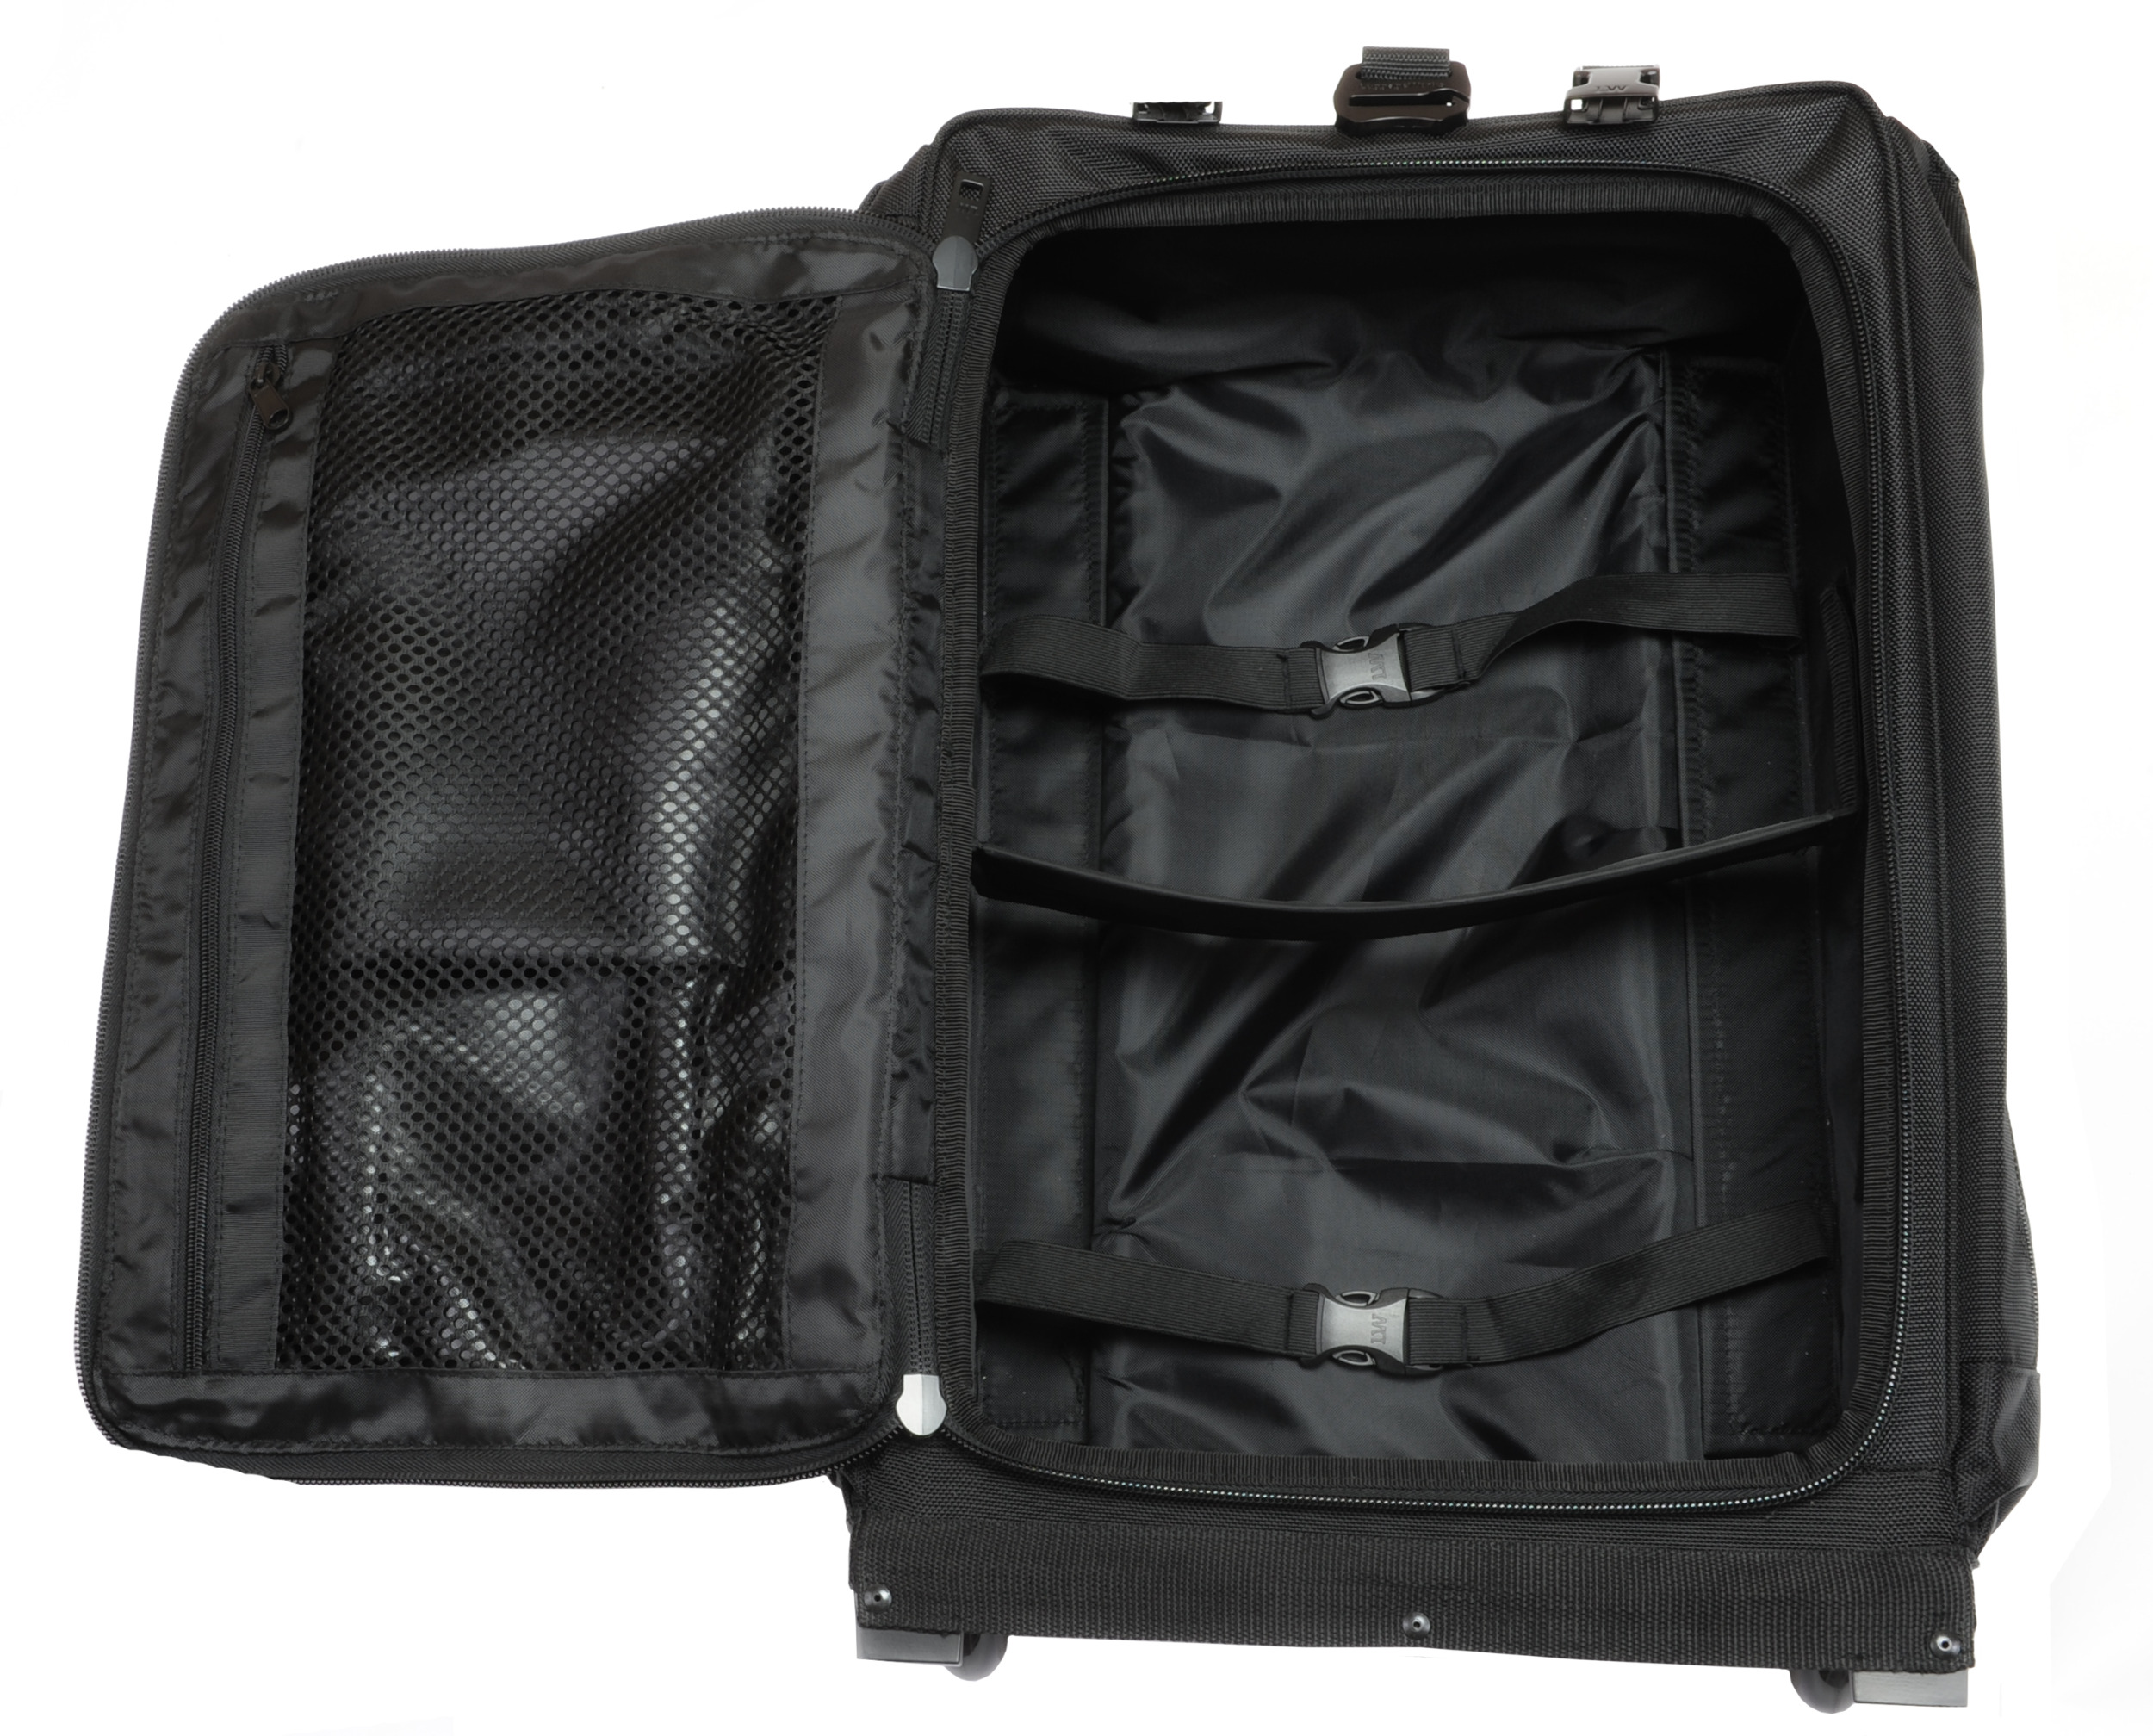 LuggageWorks Stealth 22'' Pilot Rolling Bag